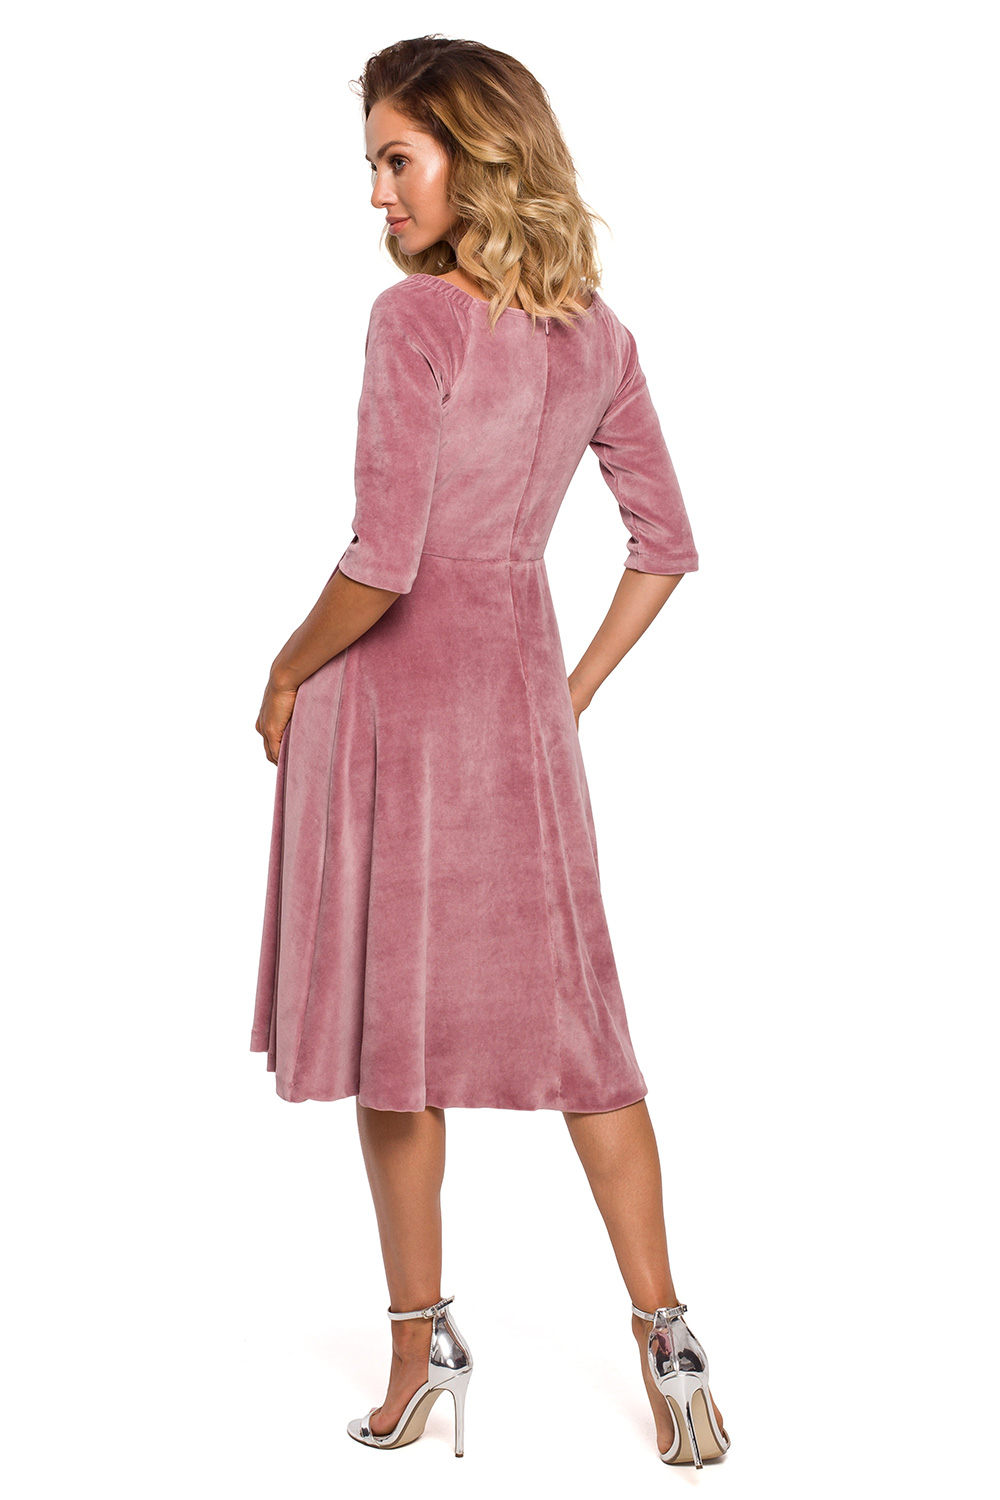  Evening dress model 159586 Moe  pink